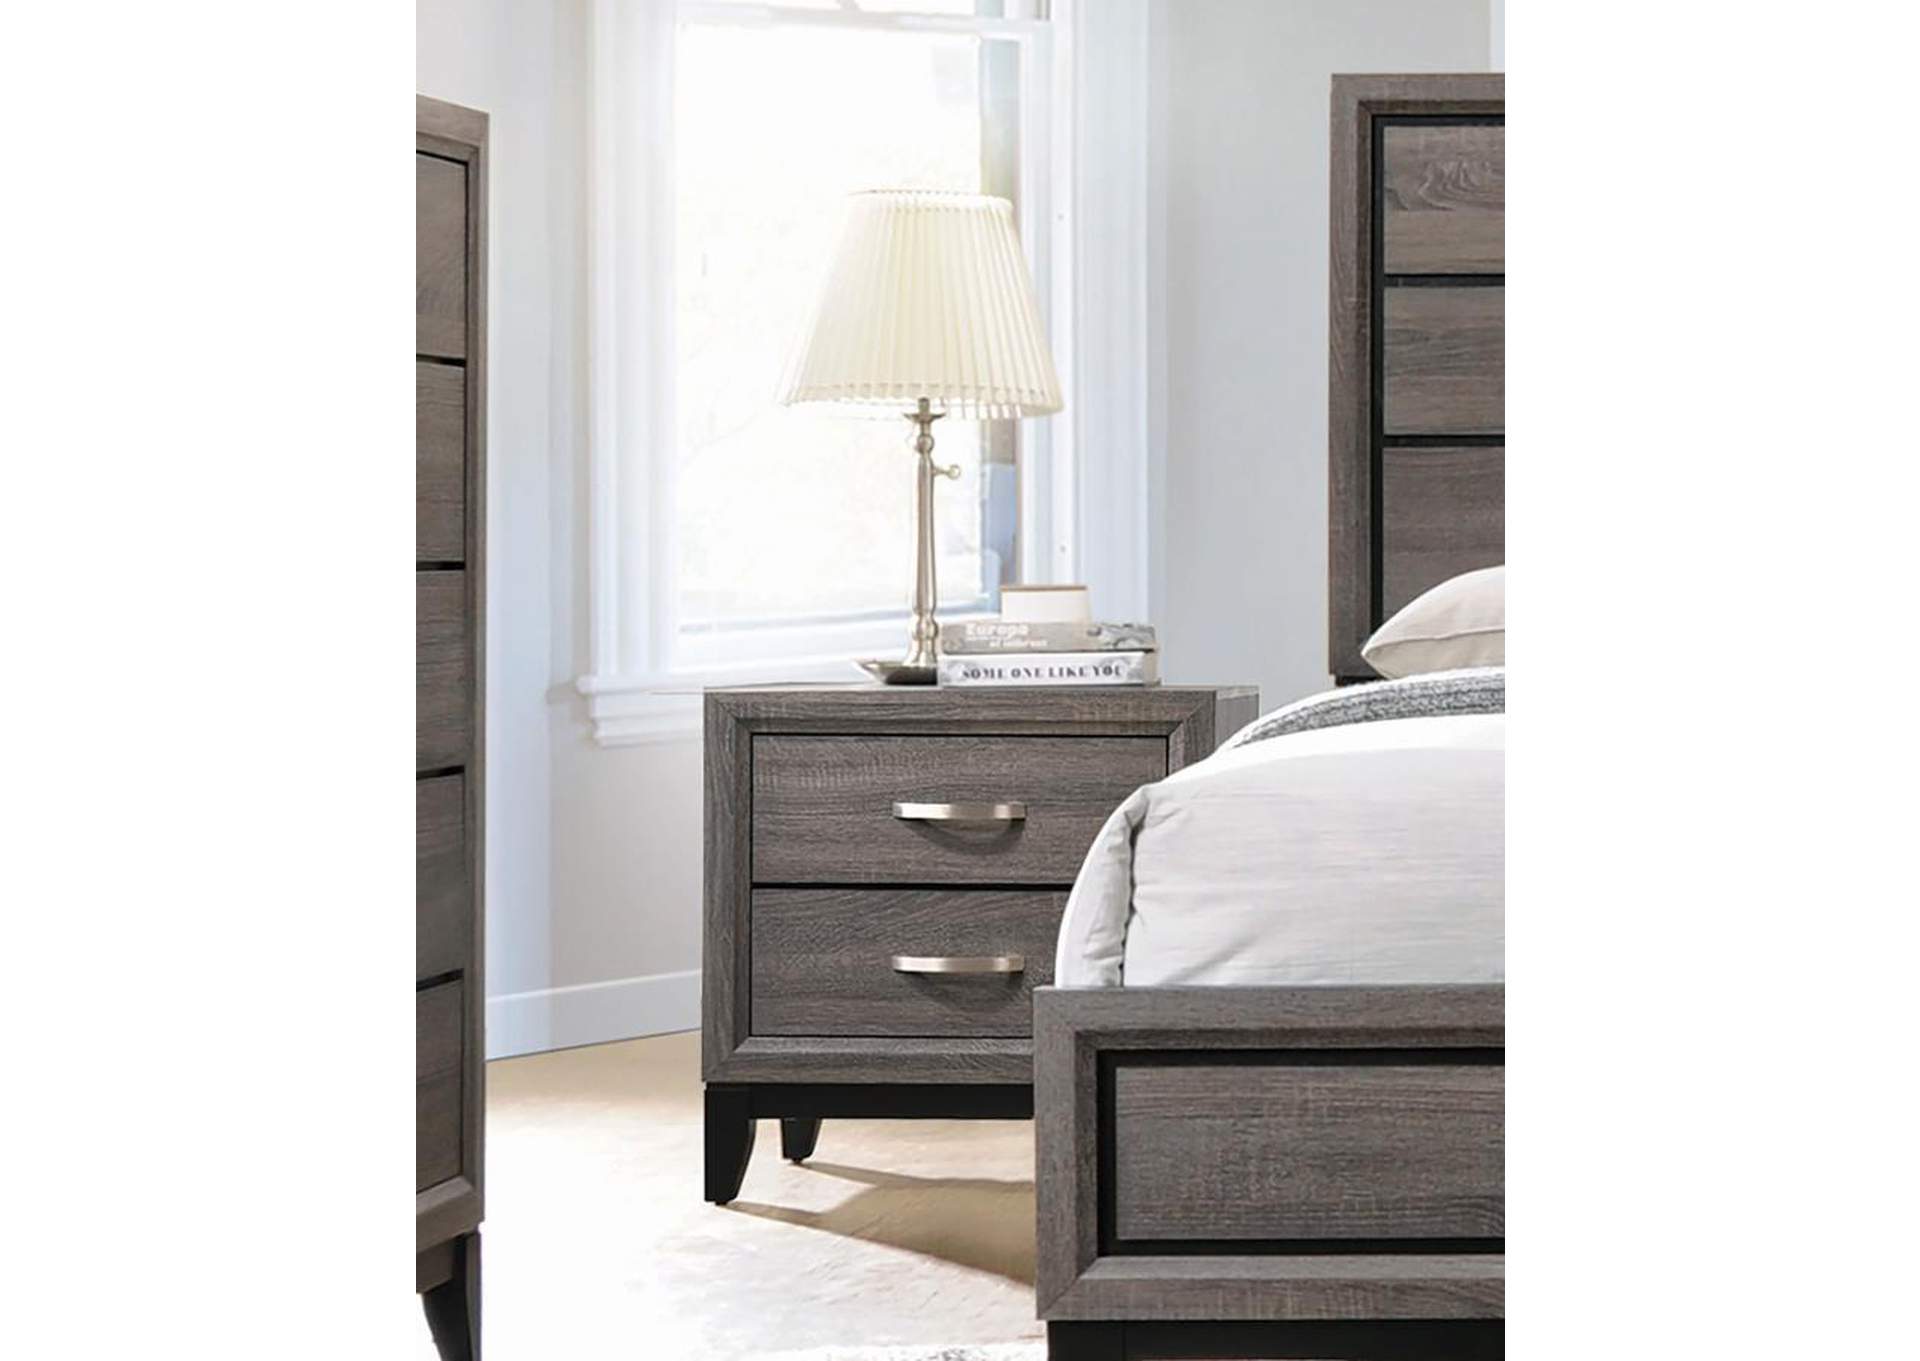 Watson 2 - drawer Nightstand Grey Oak and Black,Coaster Furniture